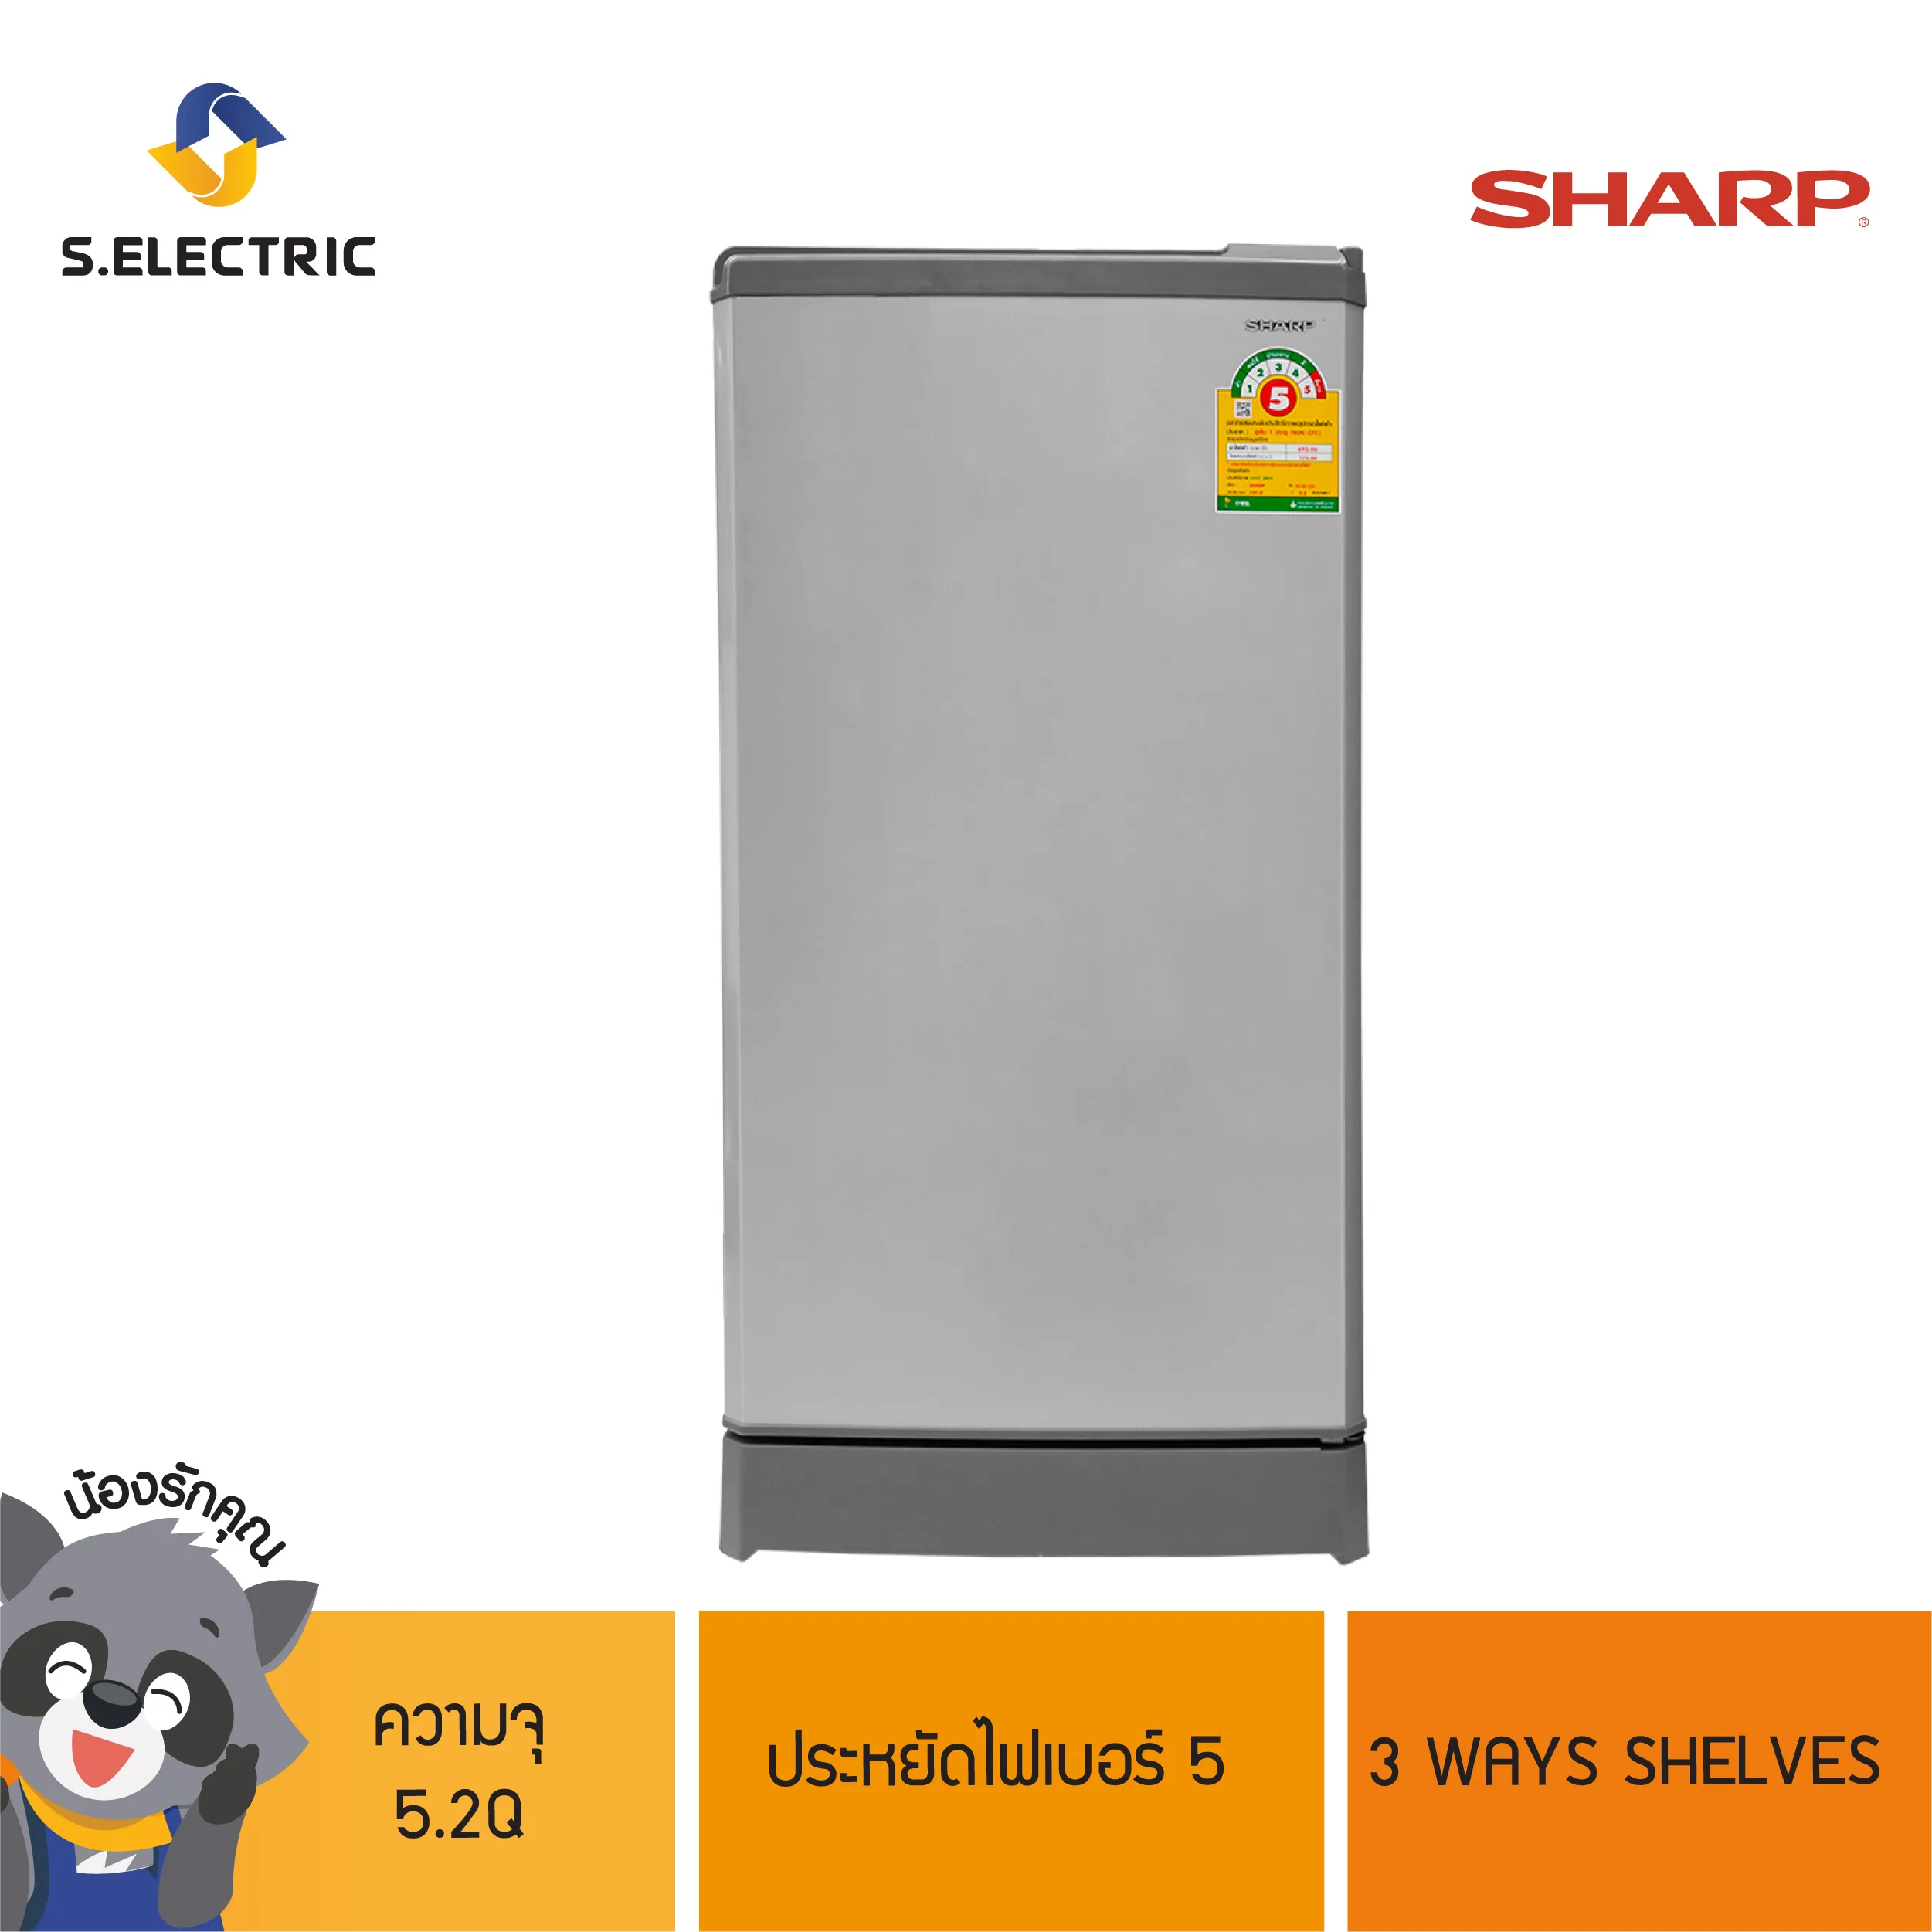 SHARP ตู้เย็น 1 ประตู รุ่น SJ-G15S-SL ขนาดความจุ 5.2Q สีเทา 147 ลิตร 3 WAYS SHELVES ประหยัดไฟเบอร์ 5